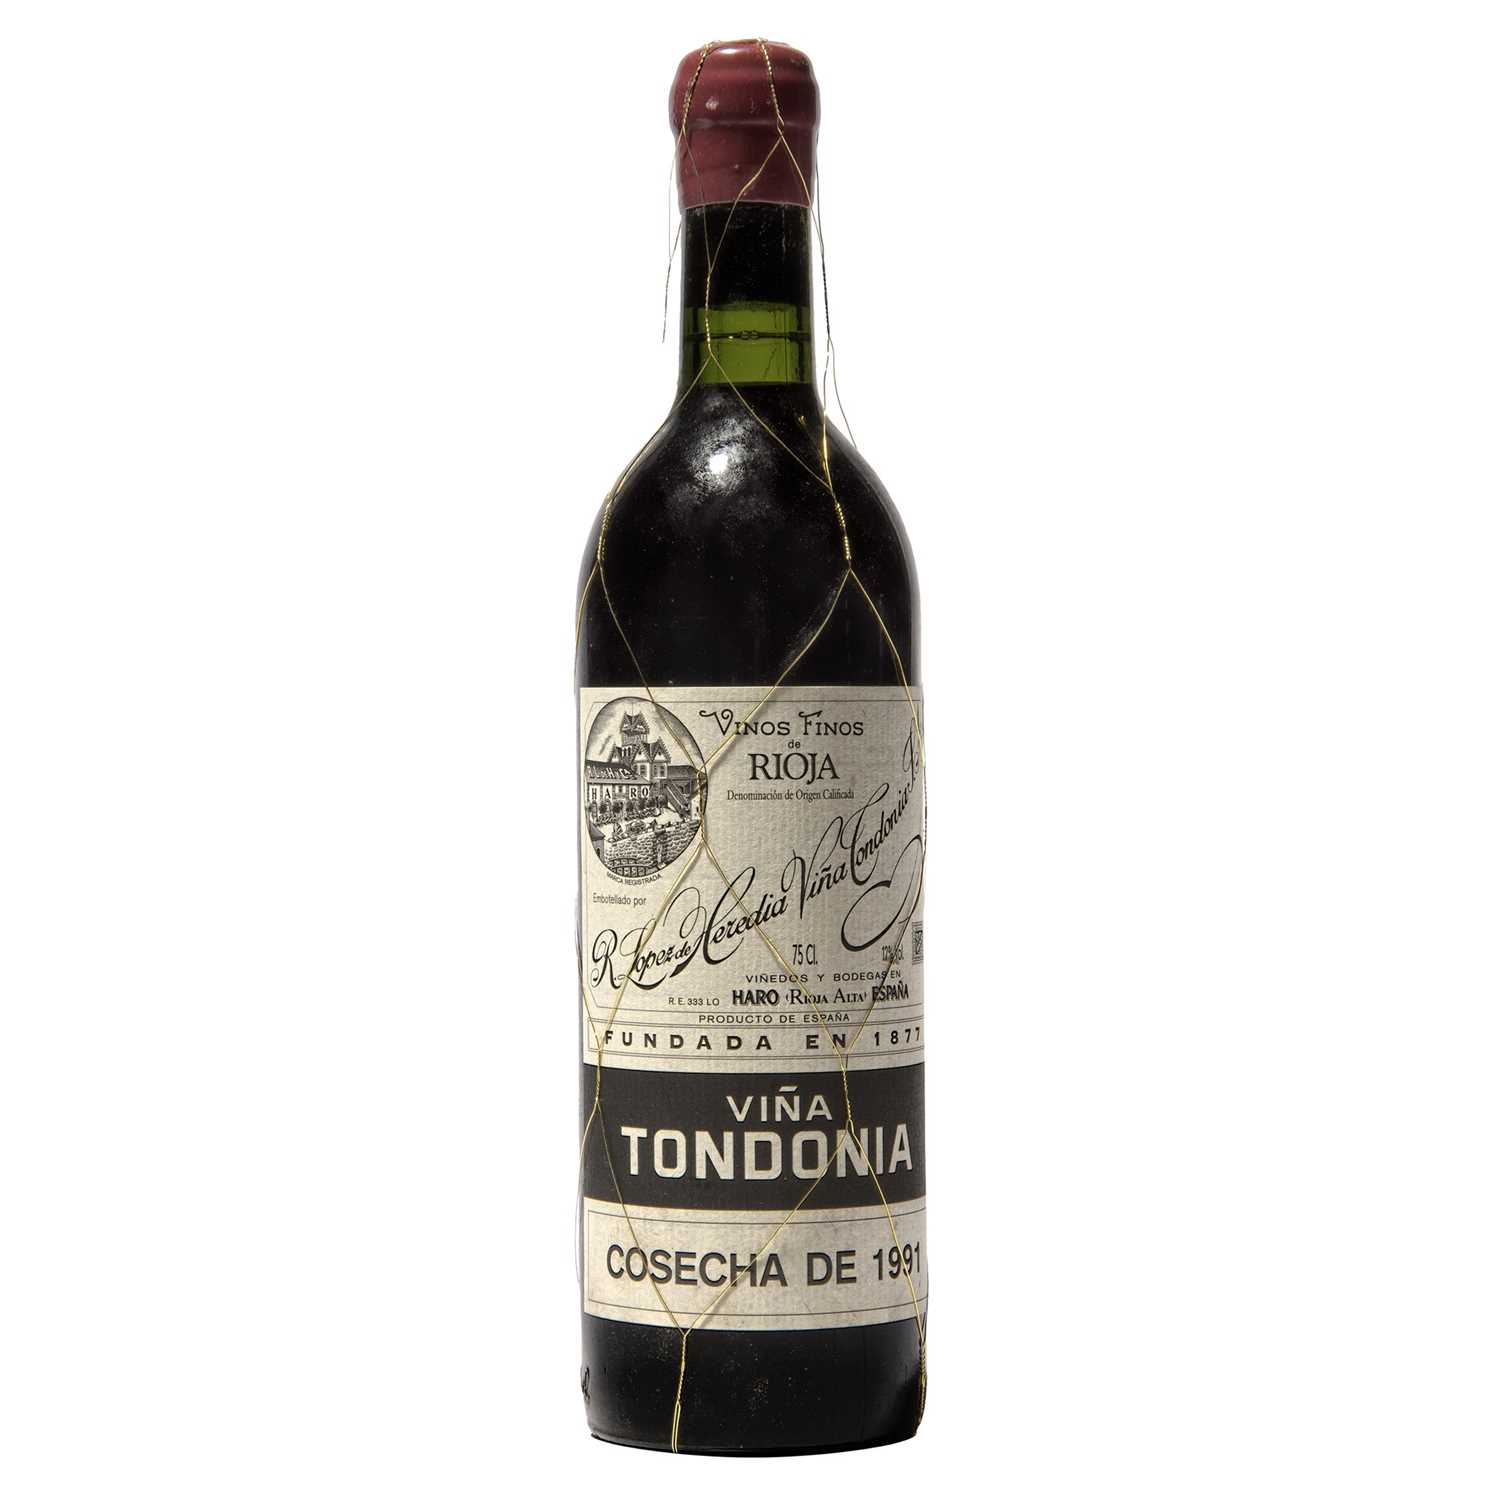 Lot 316 - 1 bottle 1991 Vina Tondonia Gran Reserva